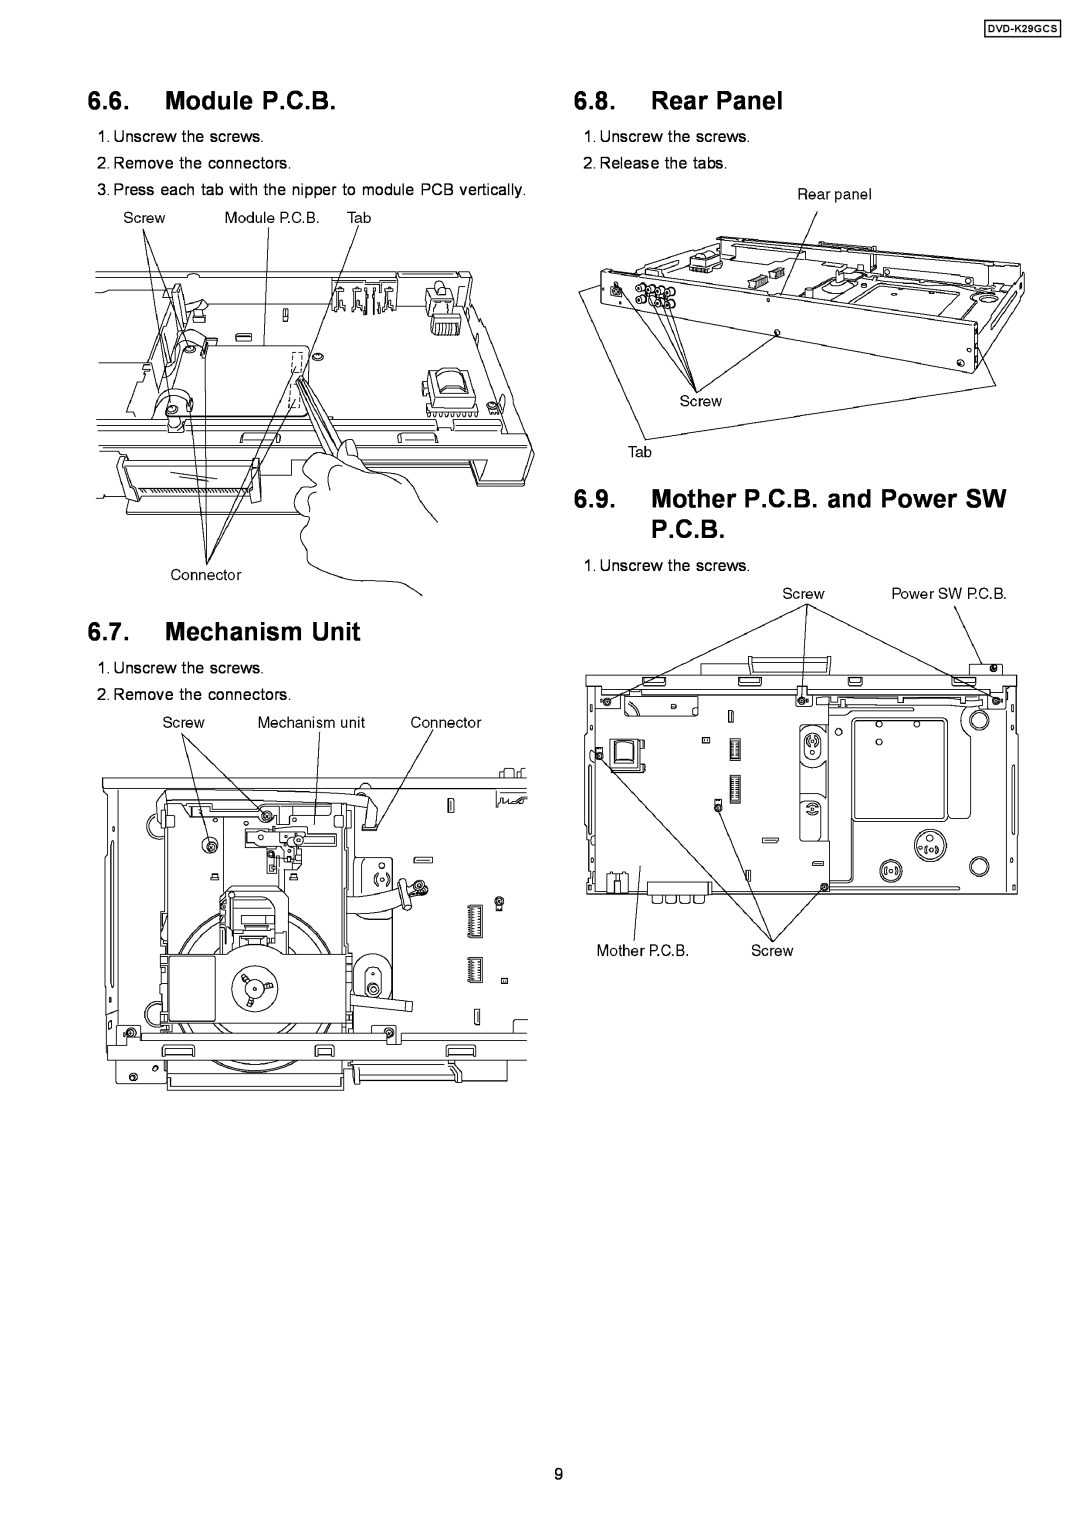 Panasonic DVD-K29GCS Module P.C.B, Rear Panel, Mother P.C.B. and Power SW P.C.B, Mechanism Unit, Unscrew the screws 